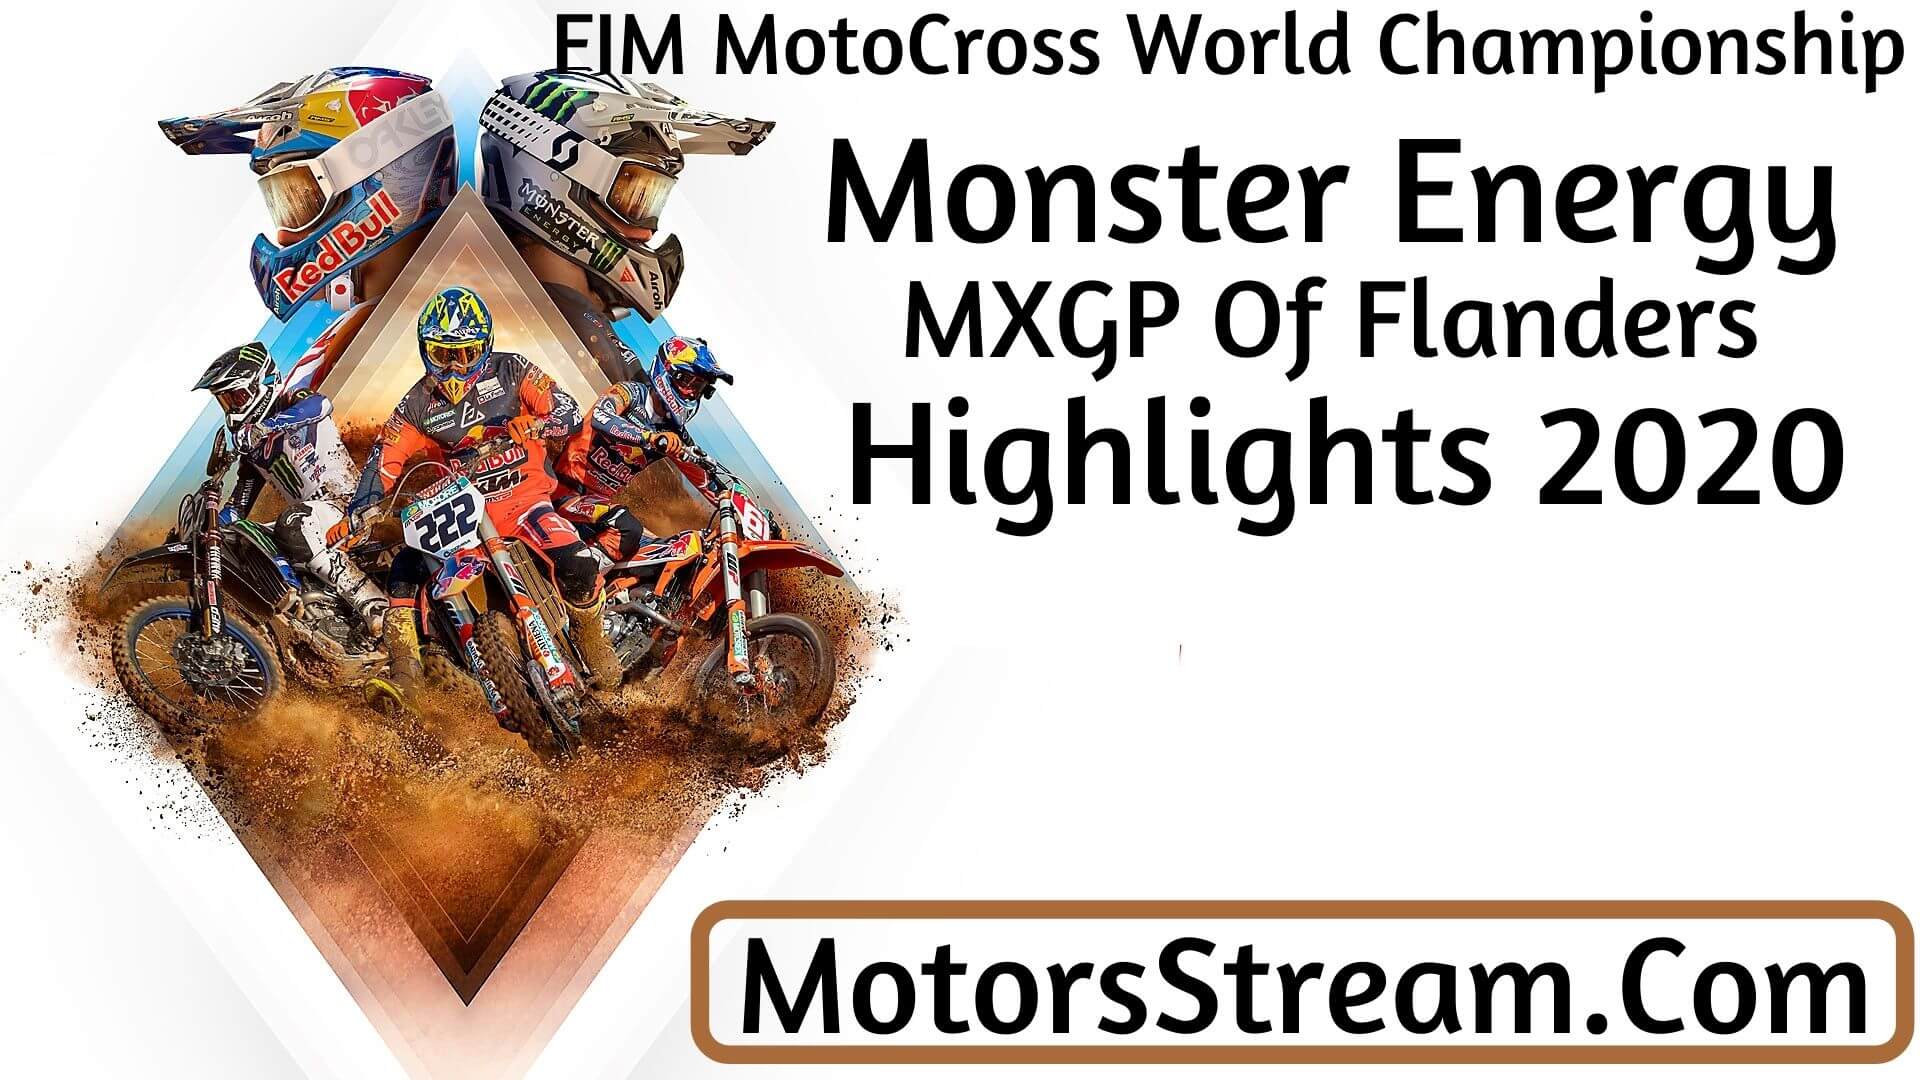 Monster Energy MXGP of Flanders Highlights 2020